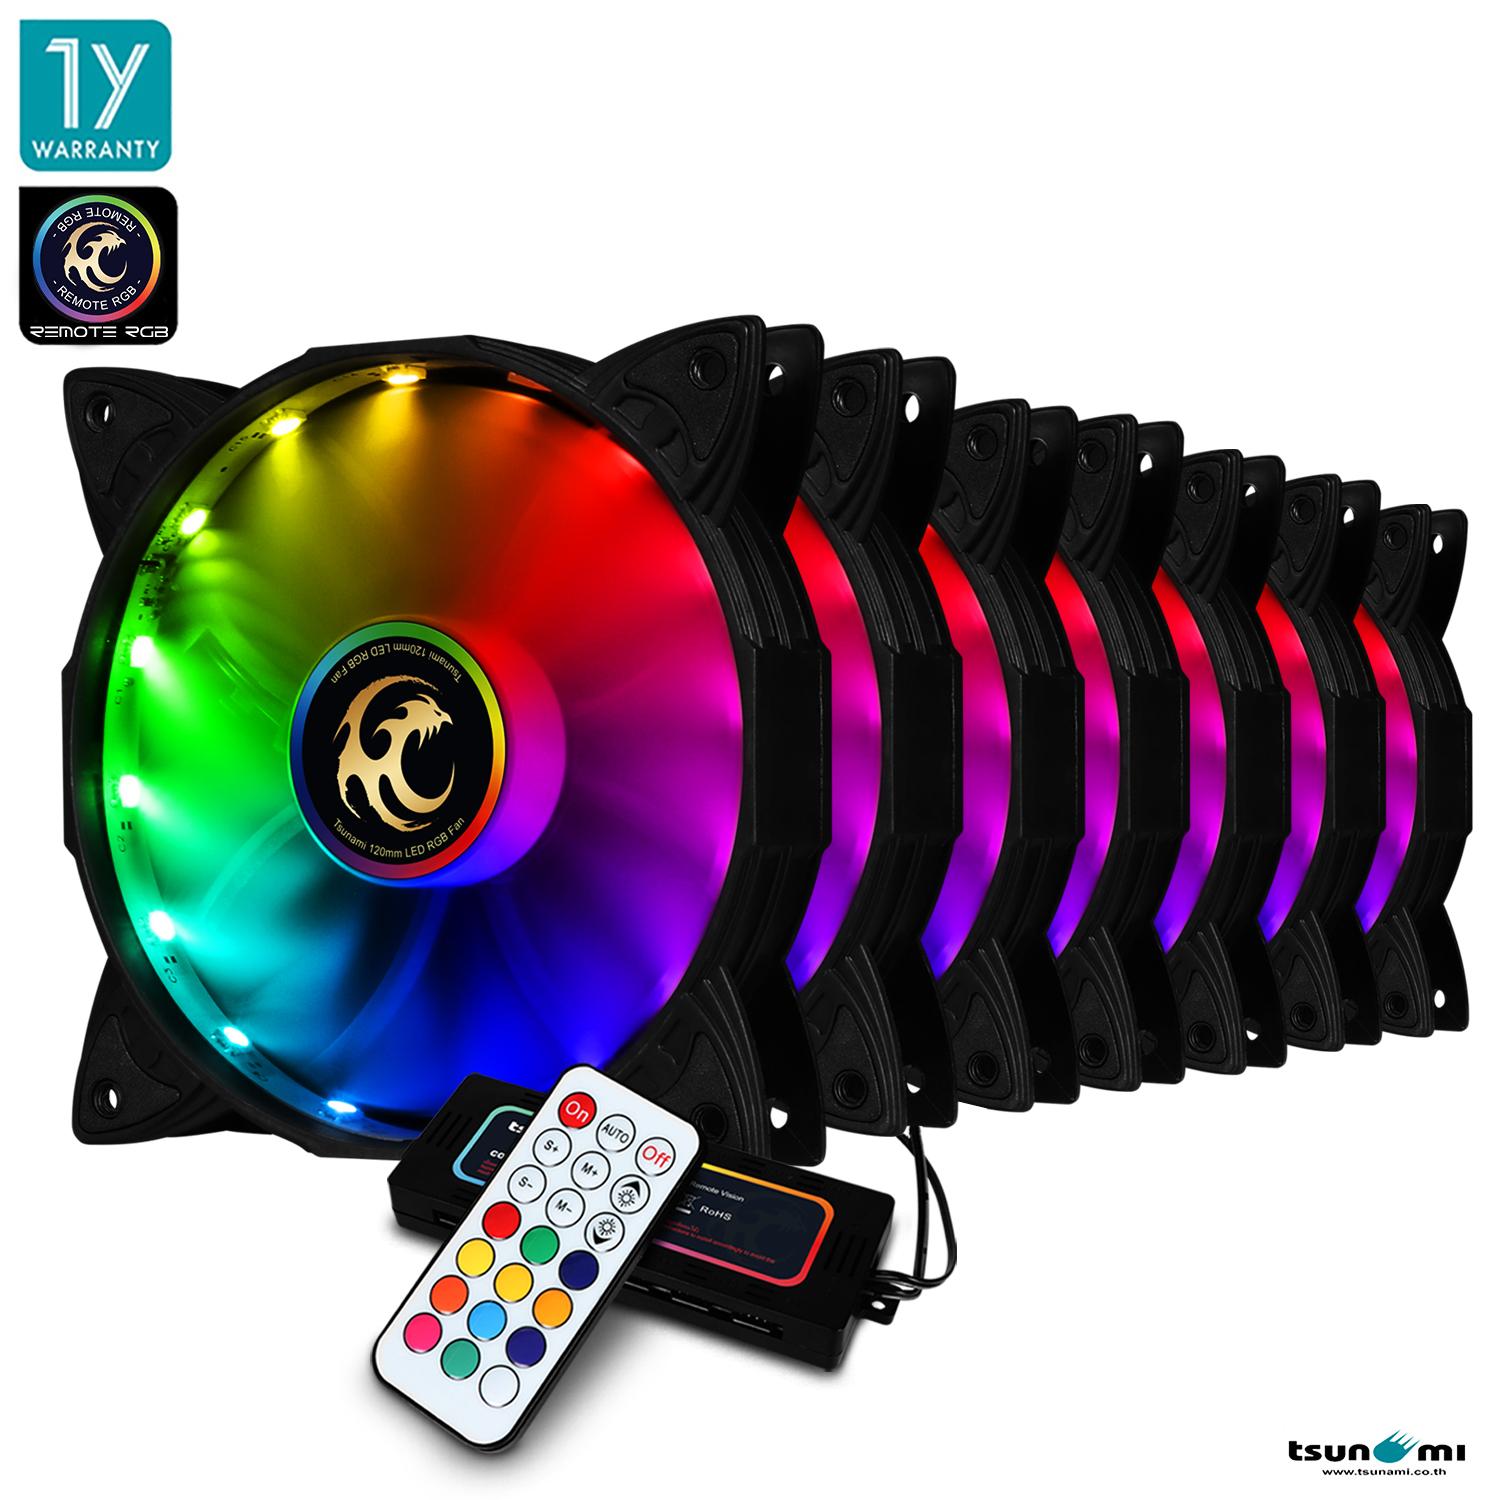 Tsunami Rainbow Series RGB Cooling Fan X 7   120mm with Remote Control